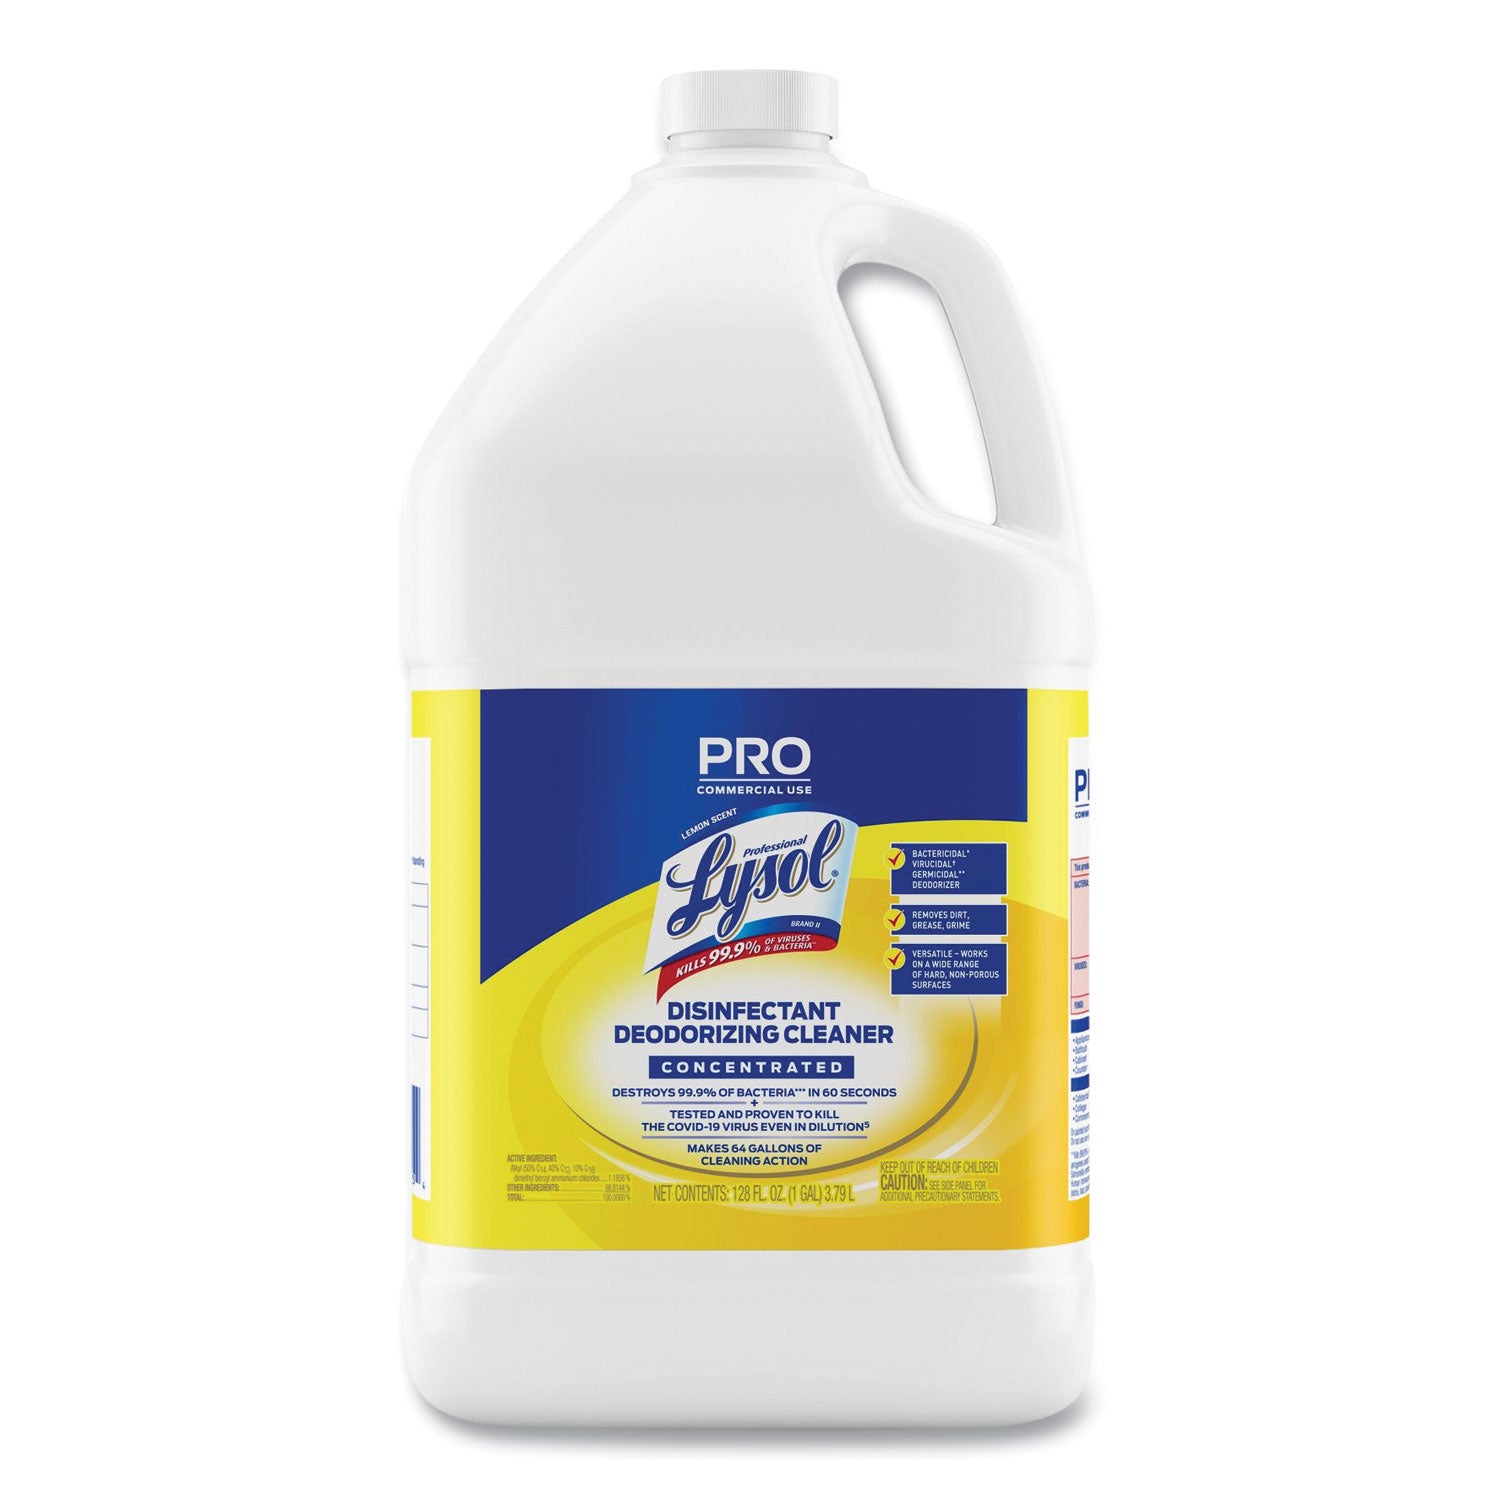 disinfectant-deodorizing-cleaner-concentrate-lemon-scent-128-oz-bottle_rac99985ea - 1